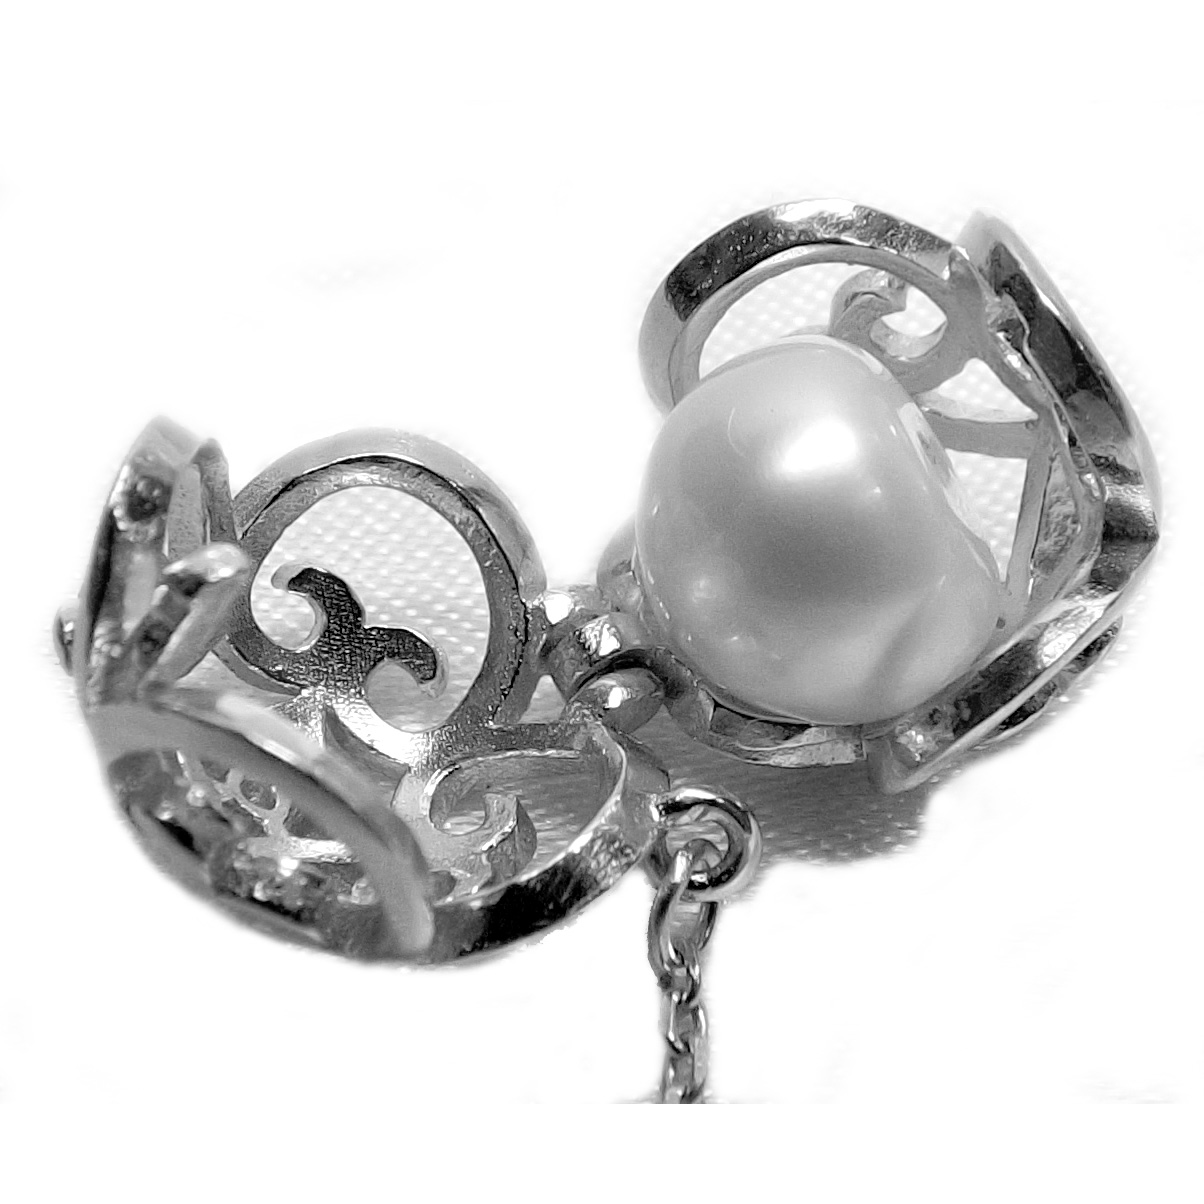 silver-pearl-cage-necklace-black